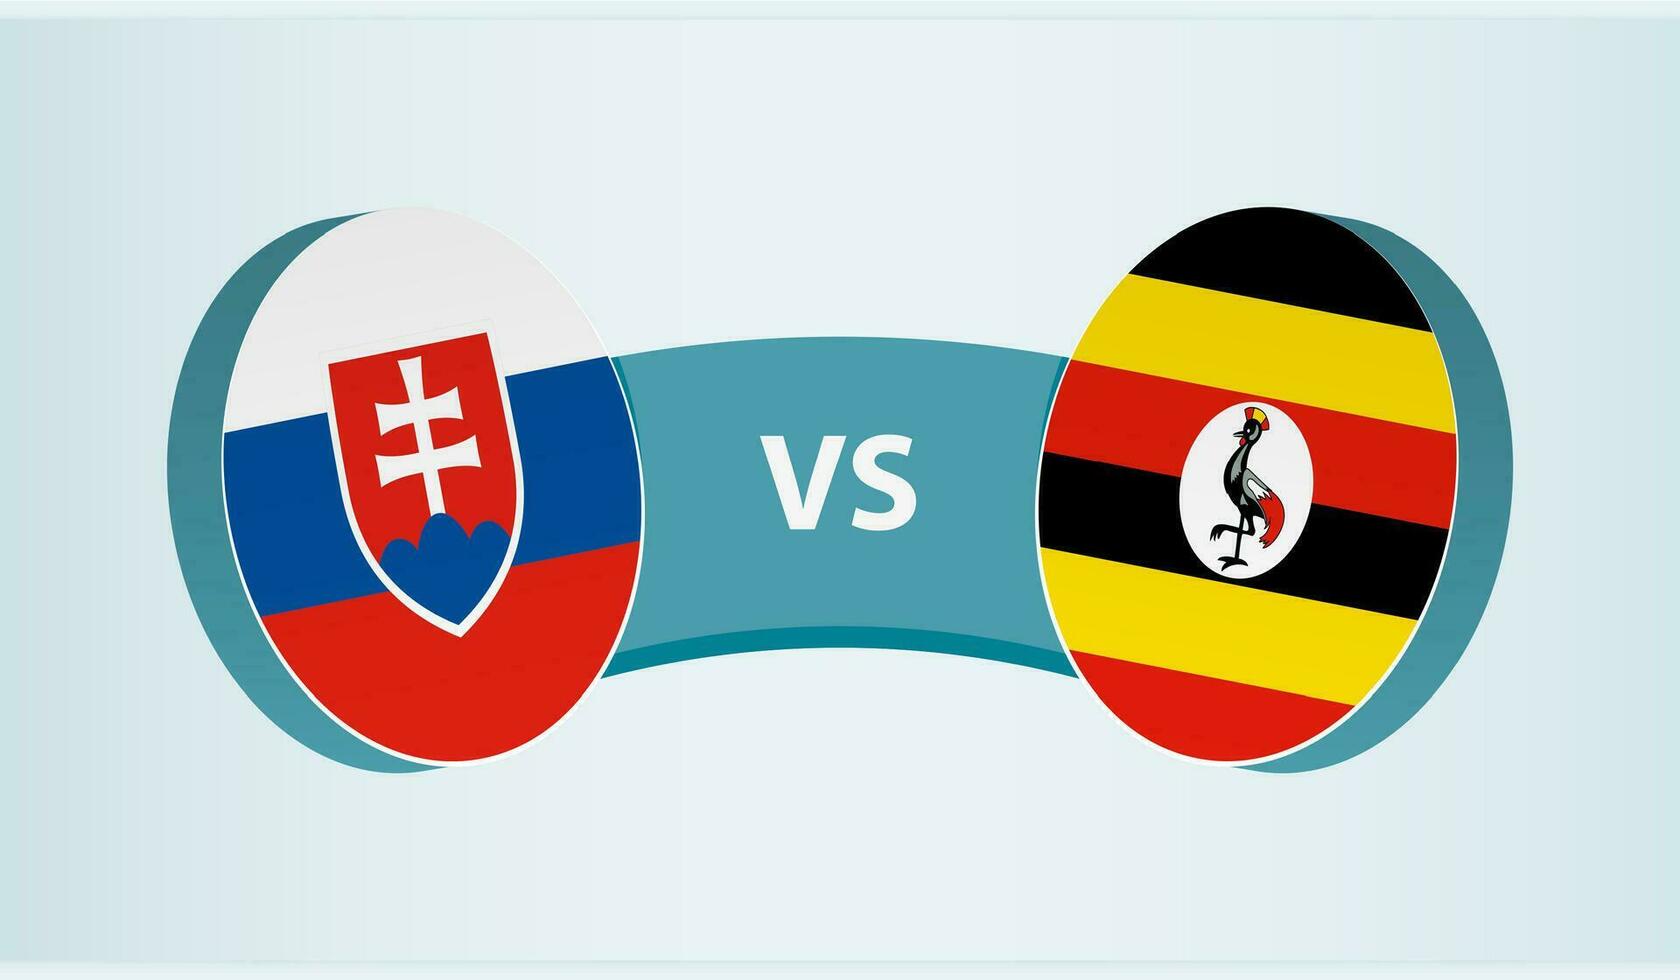 Slovakia versus Uganda, team sports competition concept. vector